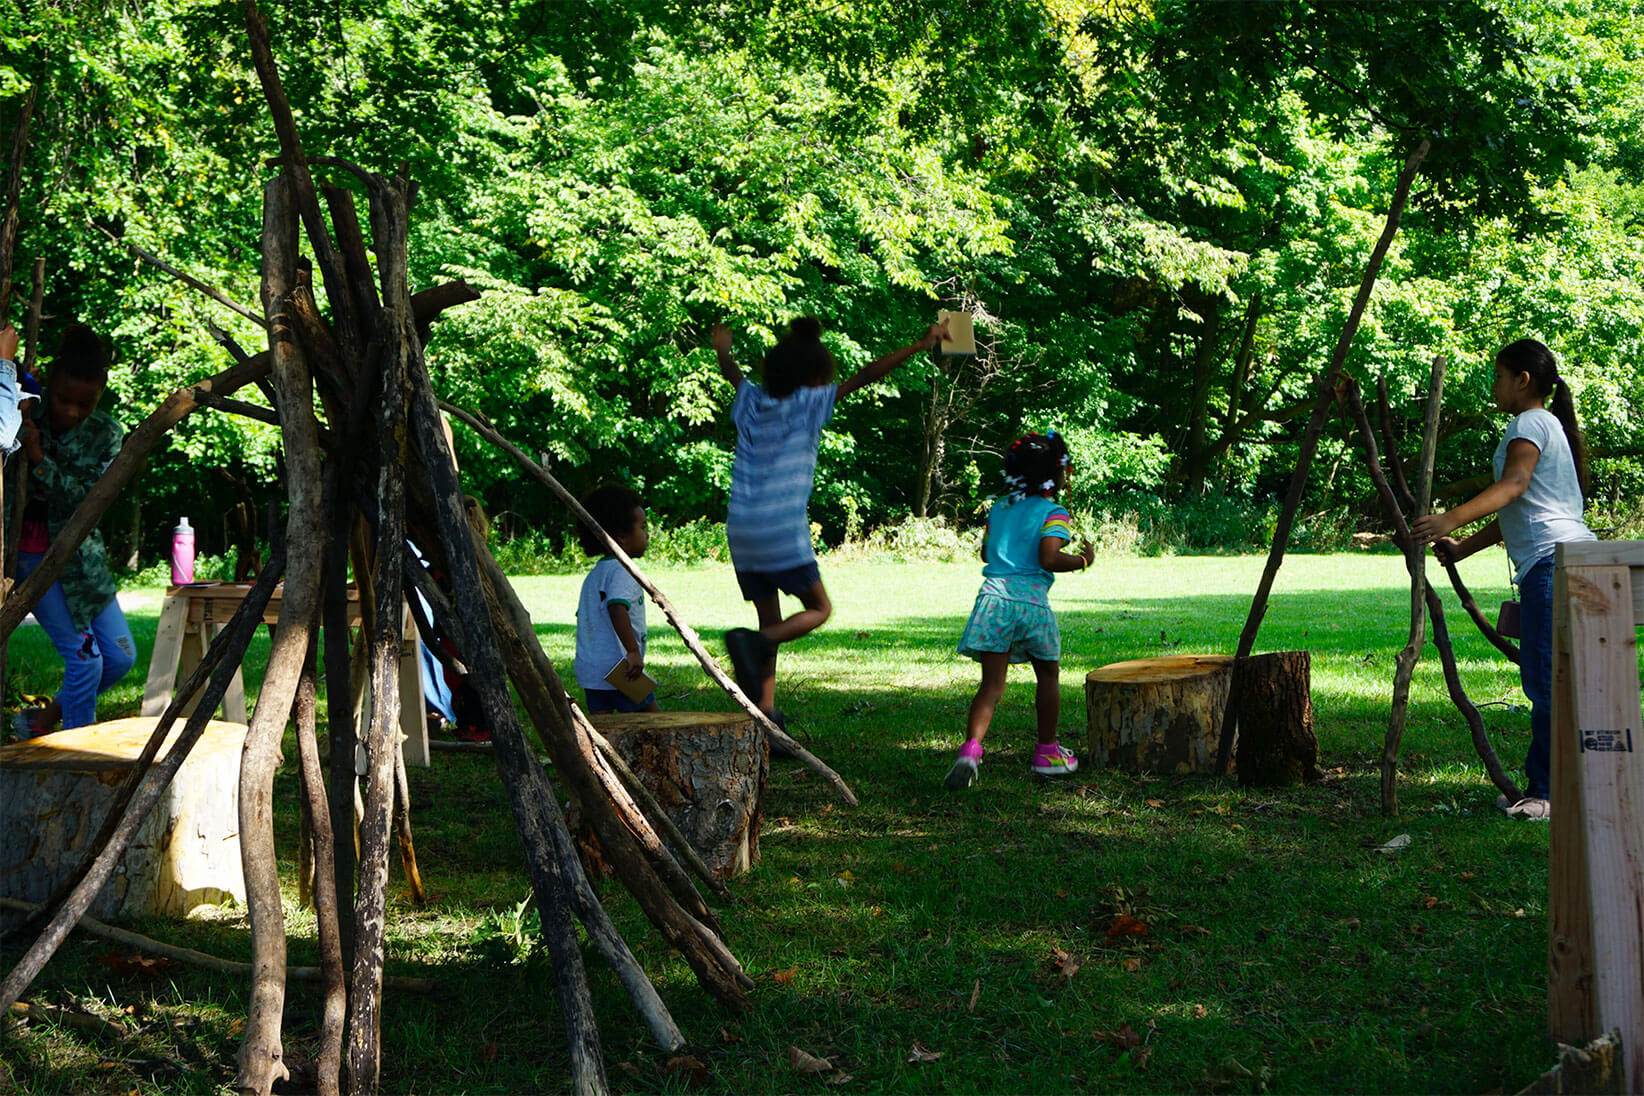 Children jumping on logs.